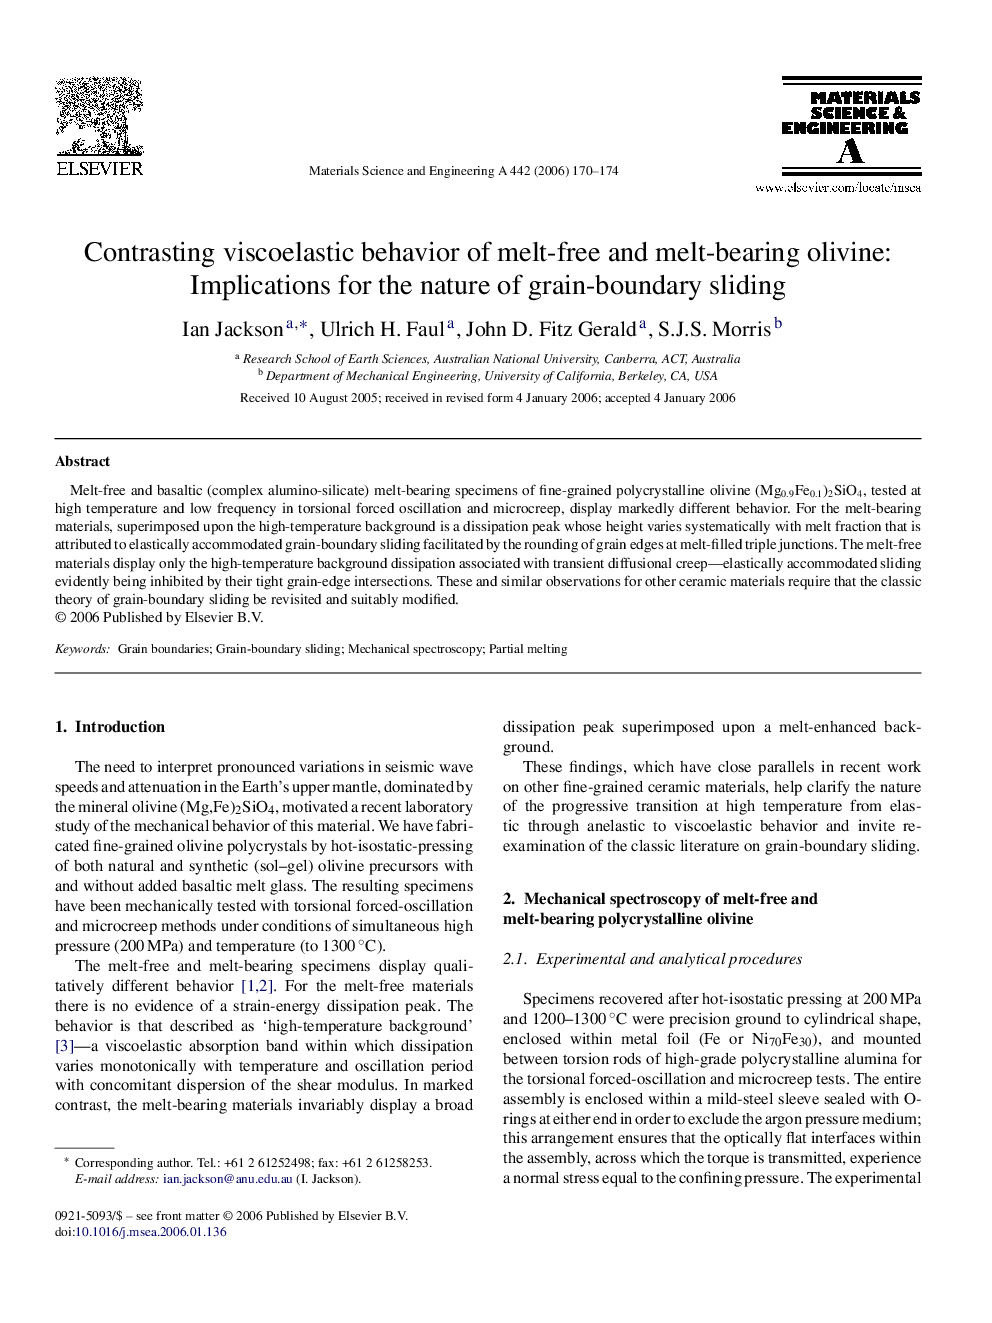 Contrasting viscoelastic behavior of melt-free and melt-bearing olivine: Implications for the nature of grain-boundary sliding